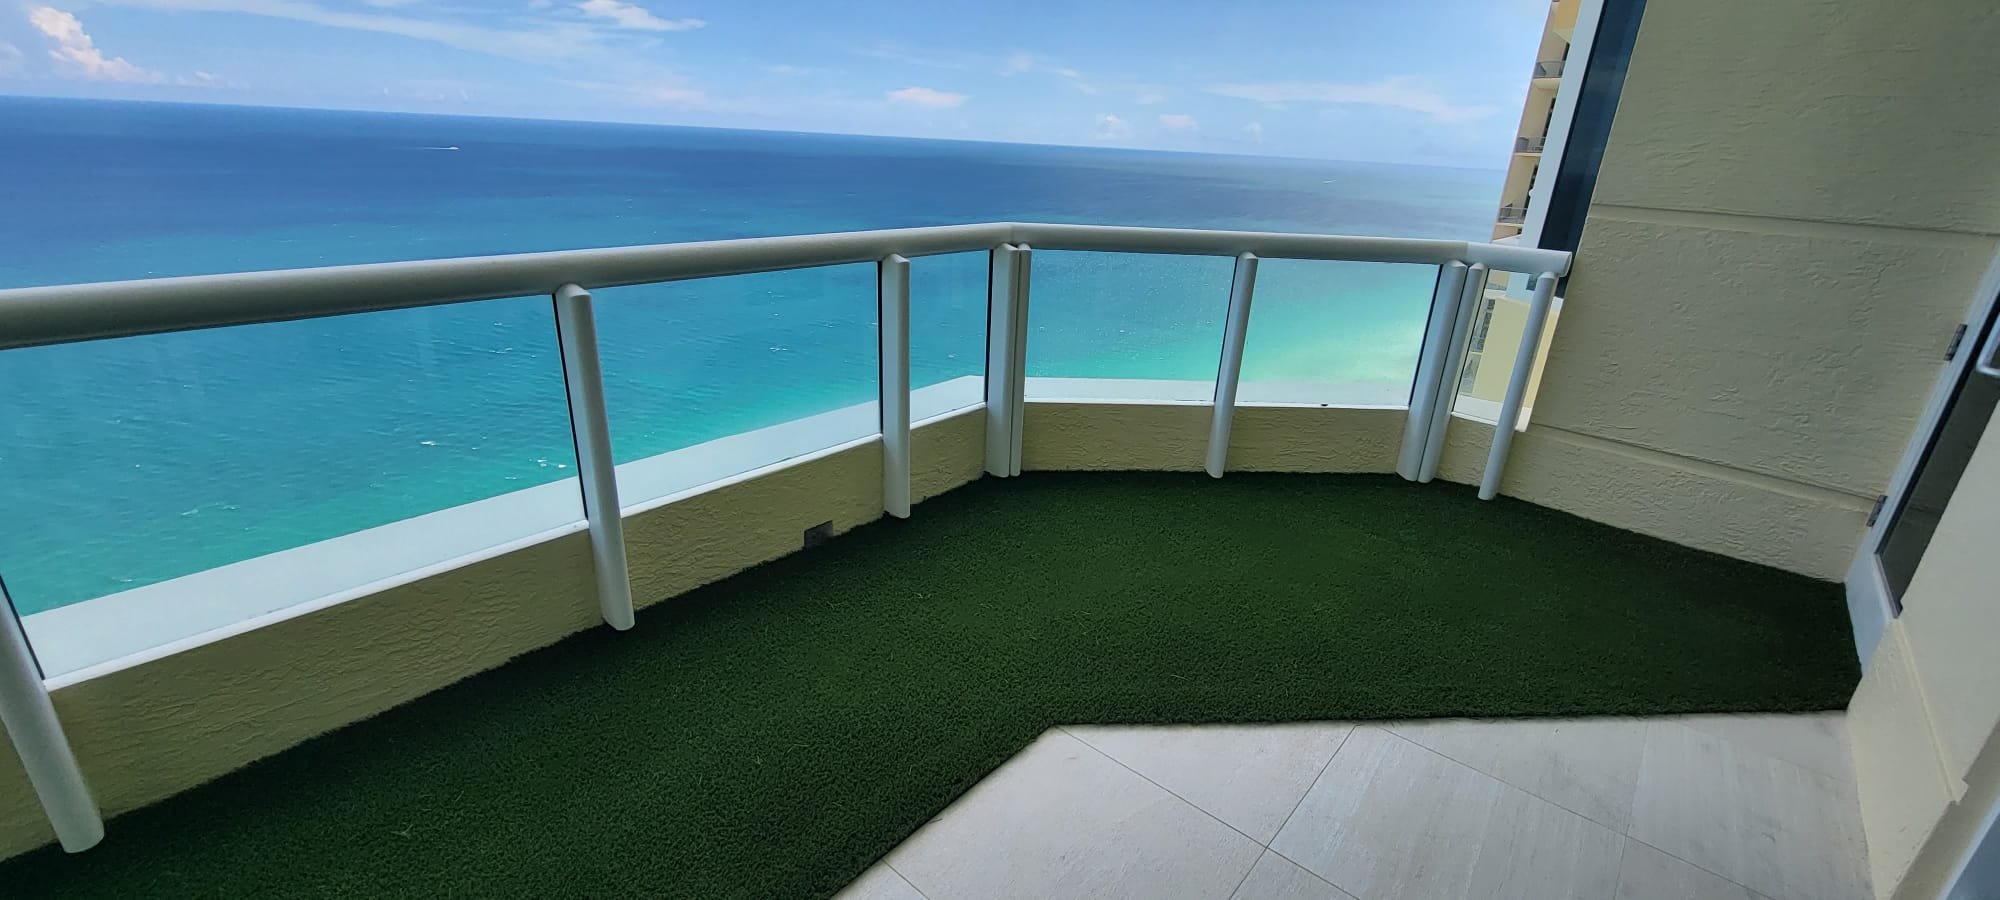 American Artificial Grass Miami Balcony